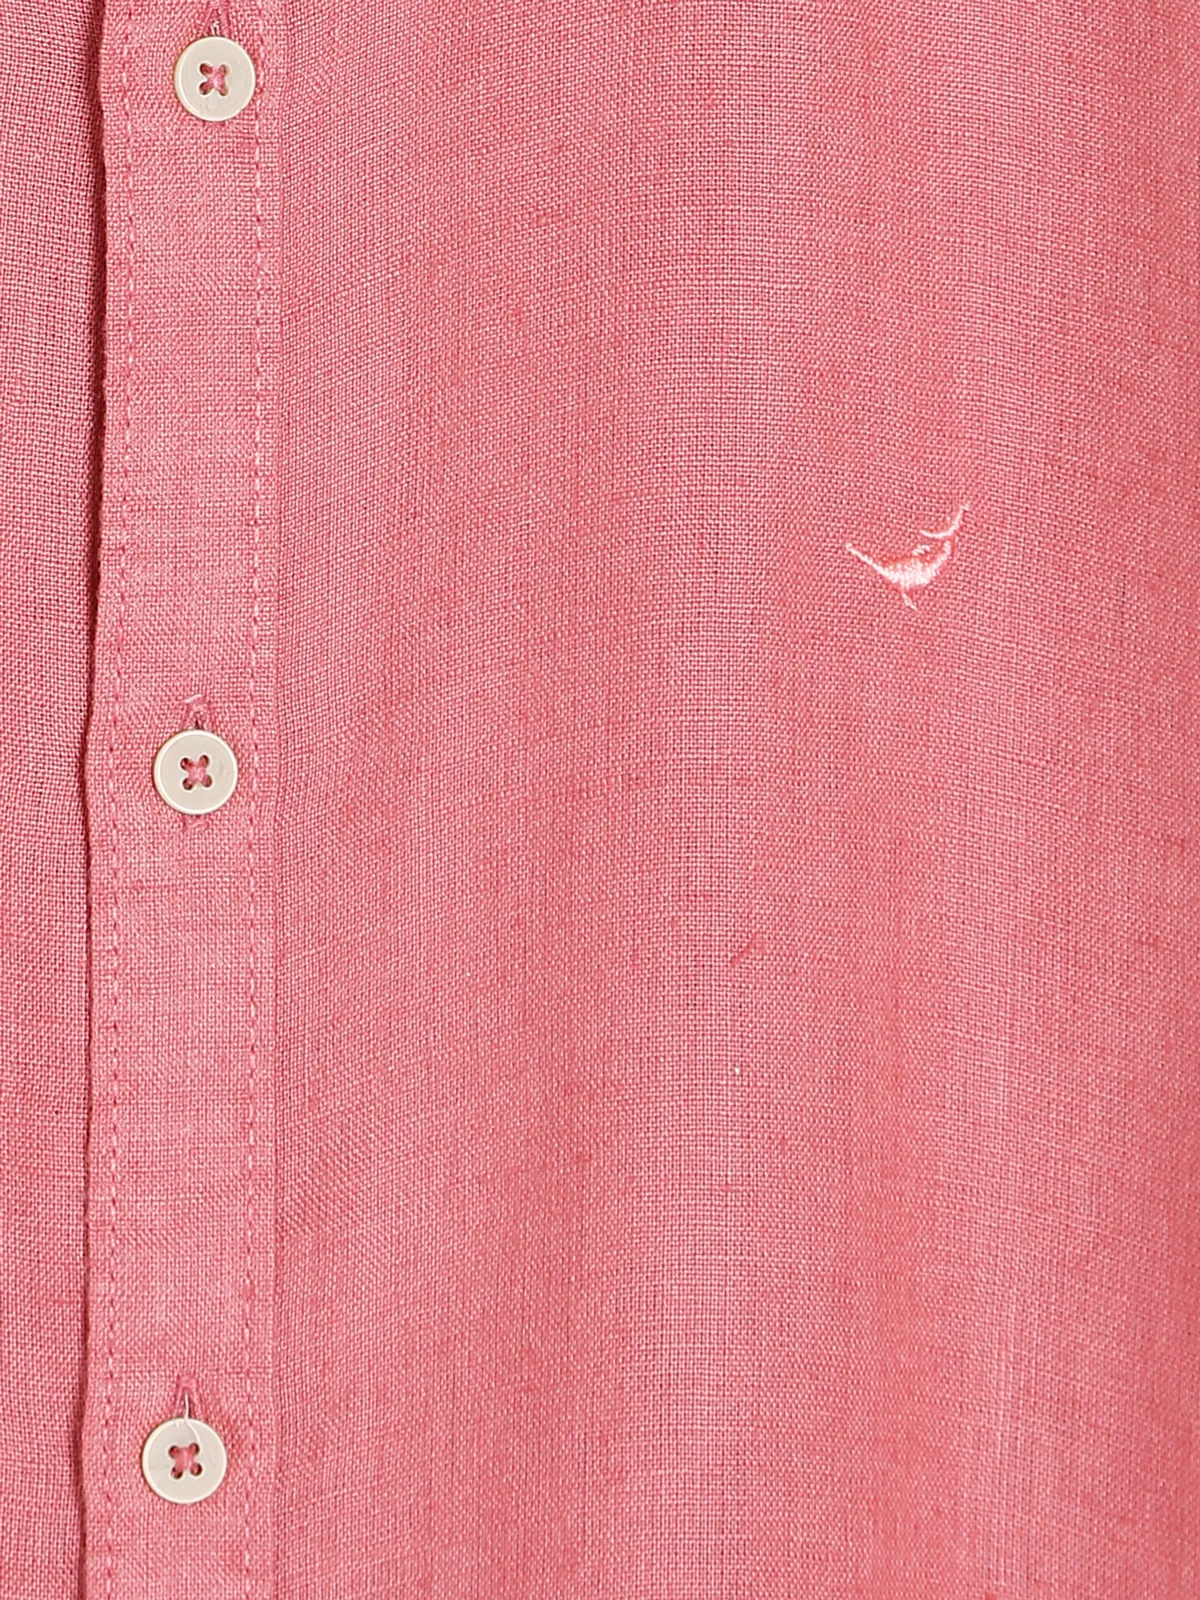 Frio coral pink plain linen shirt